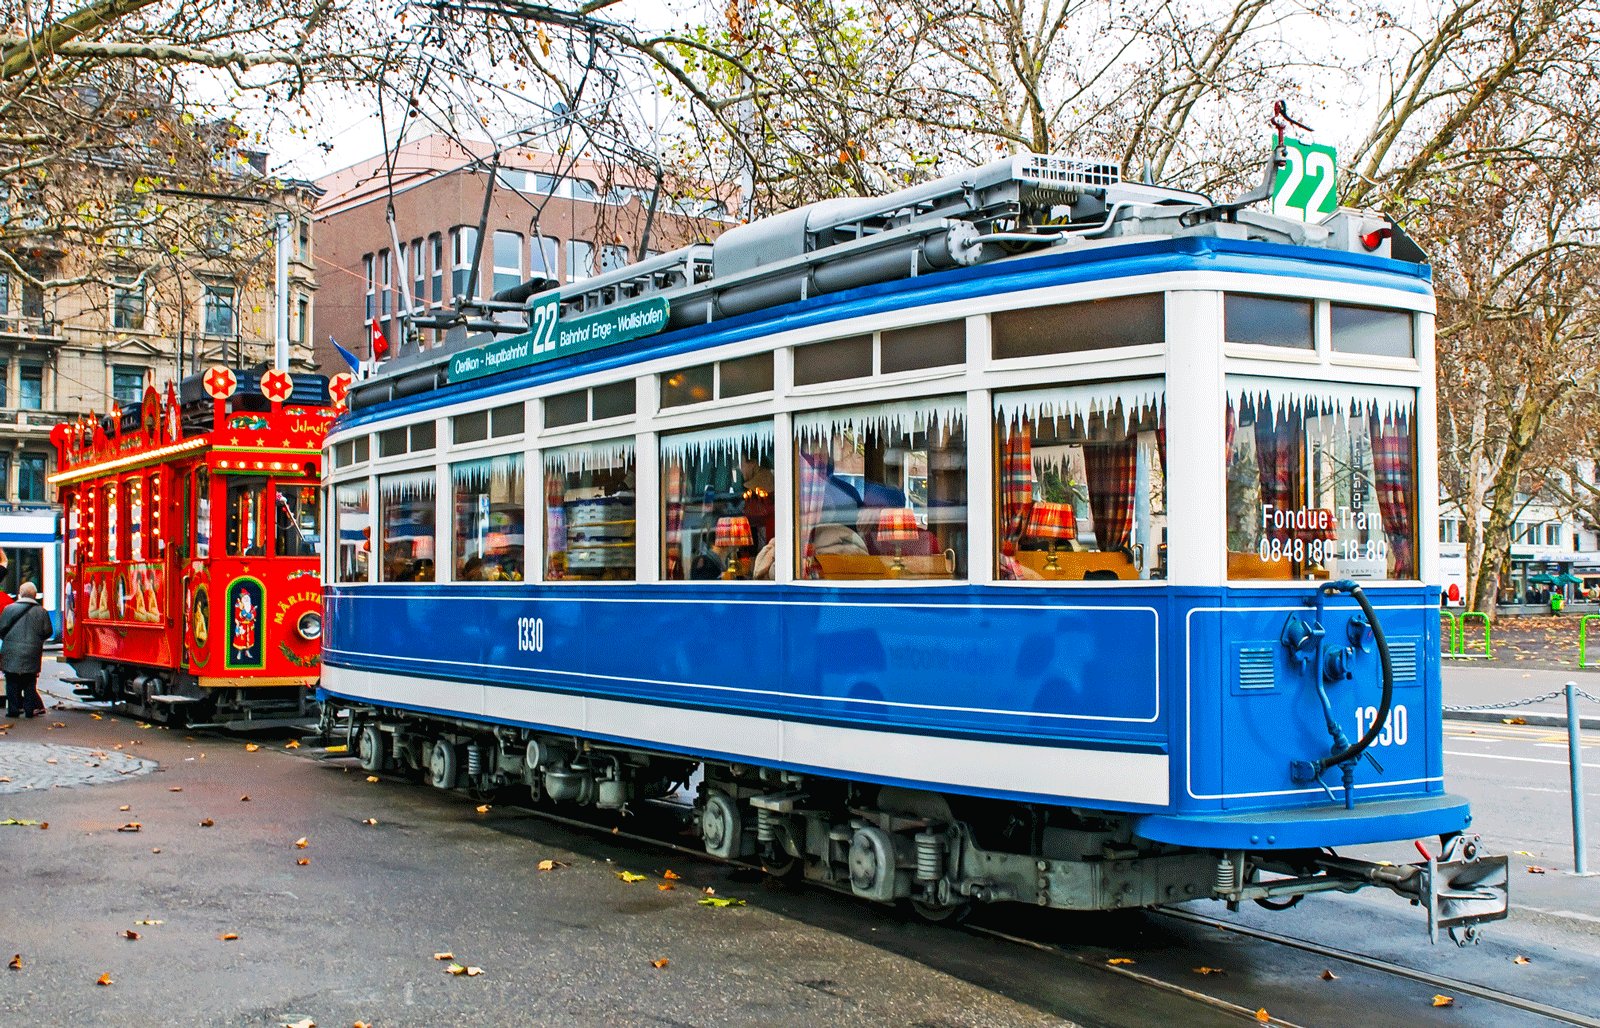 How to ride in Fondue tram in Zurich